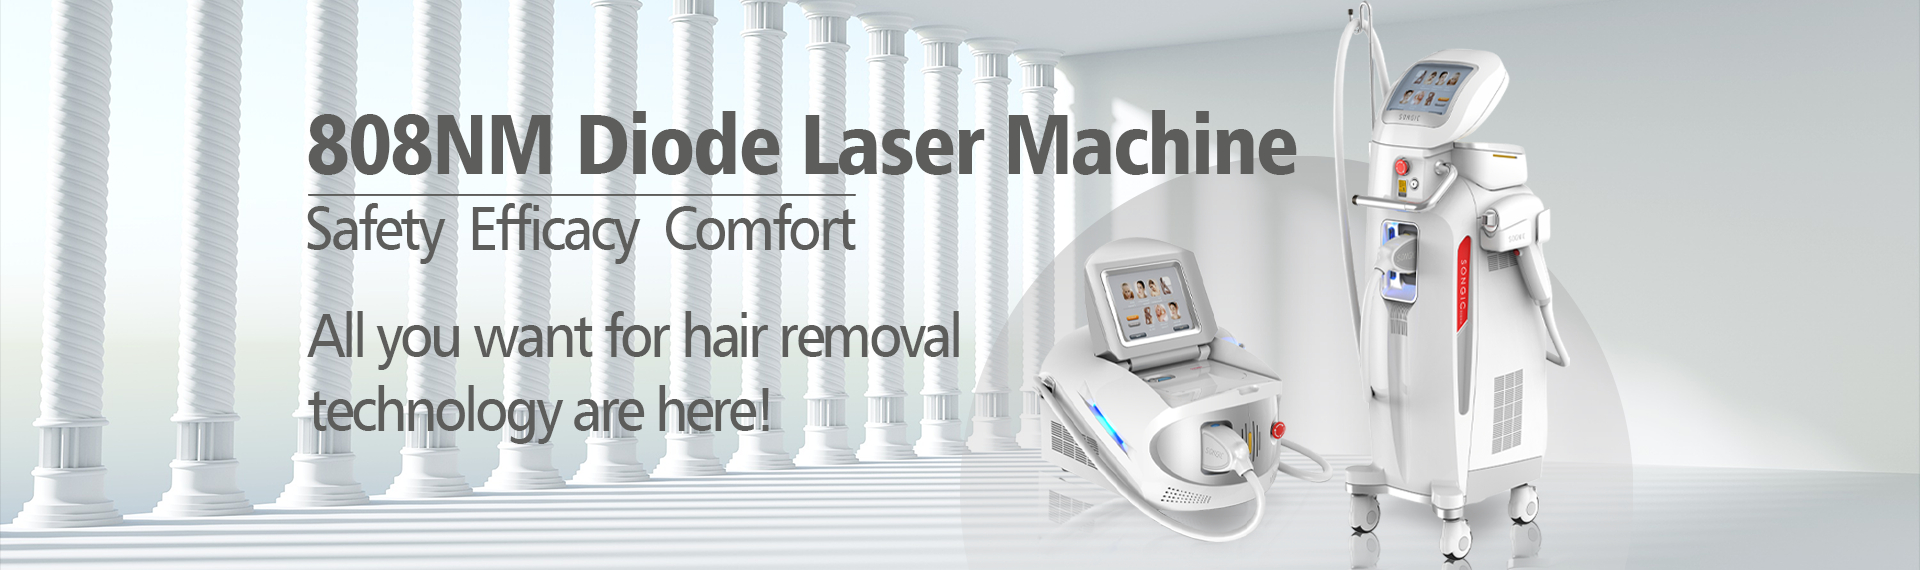 2-808NM Diode Laser Machine.